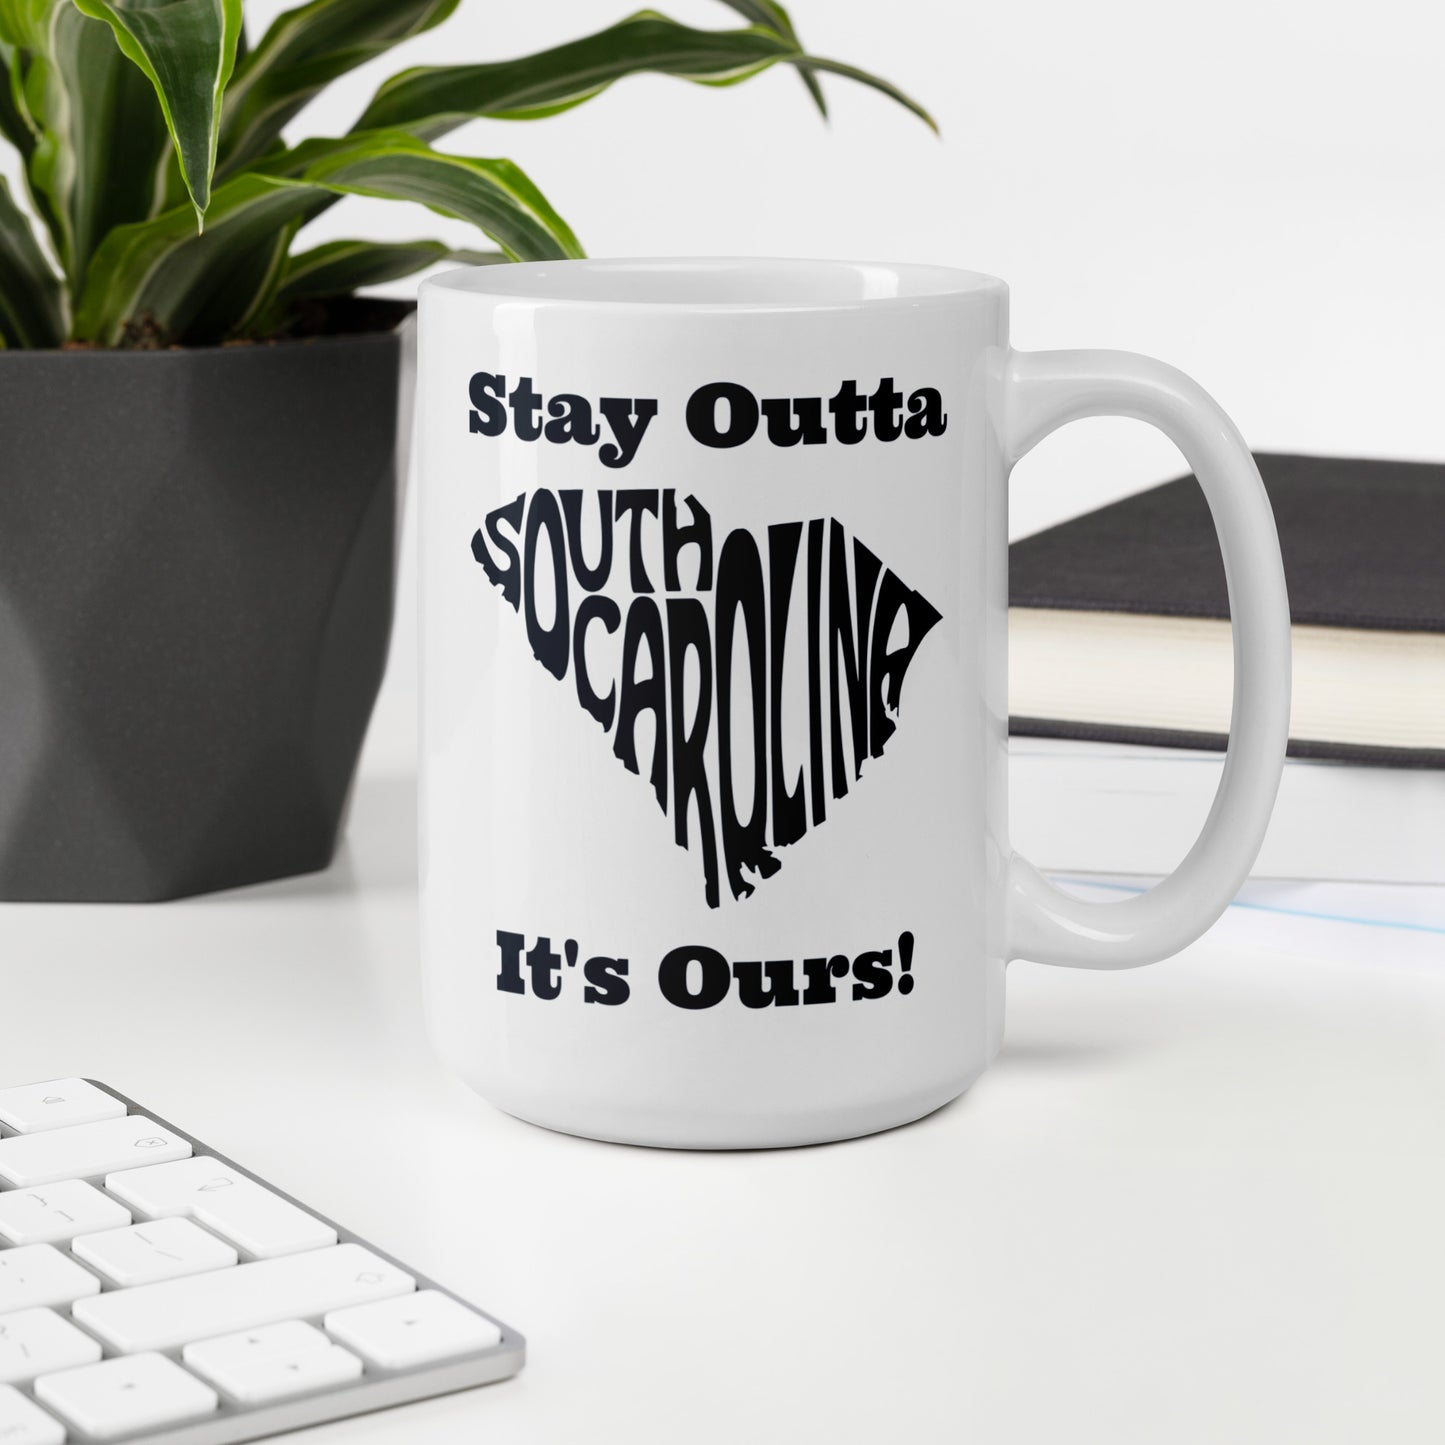 Stay Outta South Carolina - Black Font - White Glossy Mug